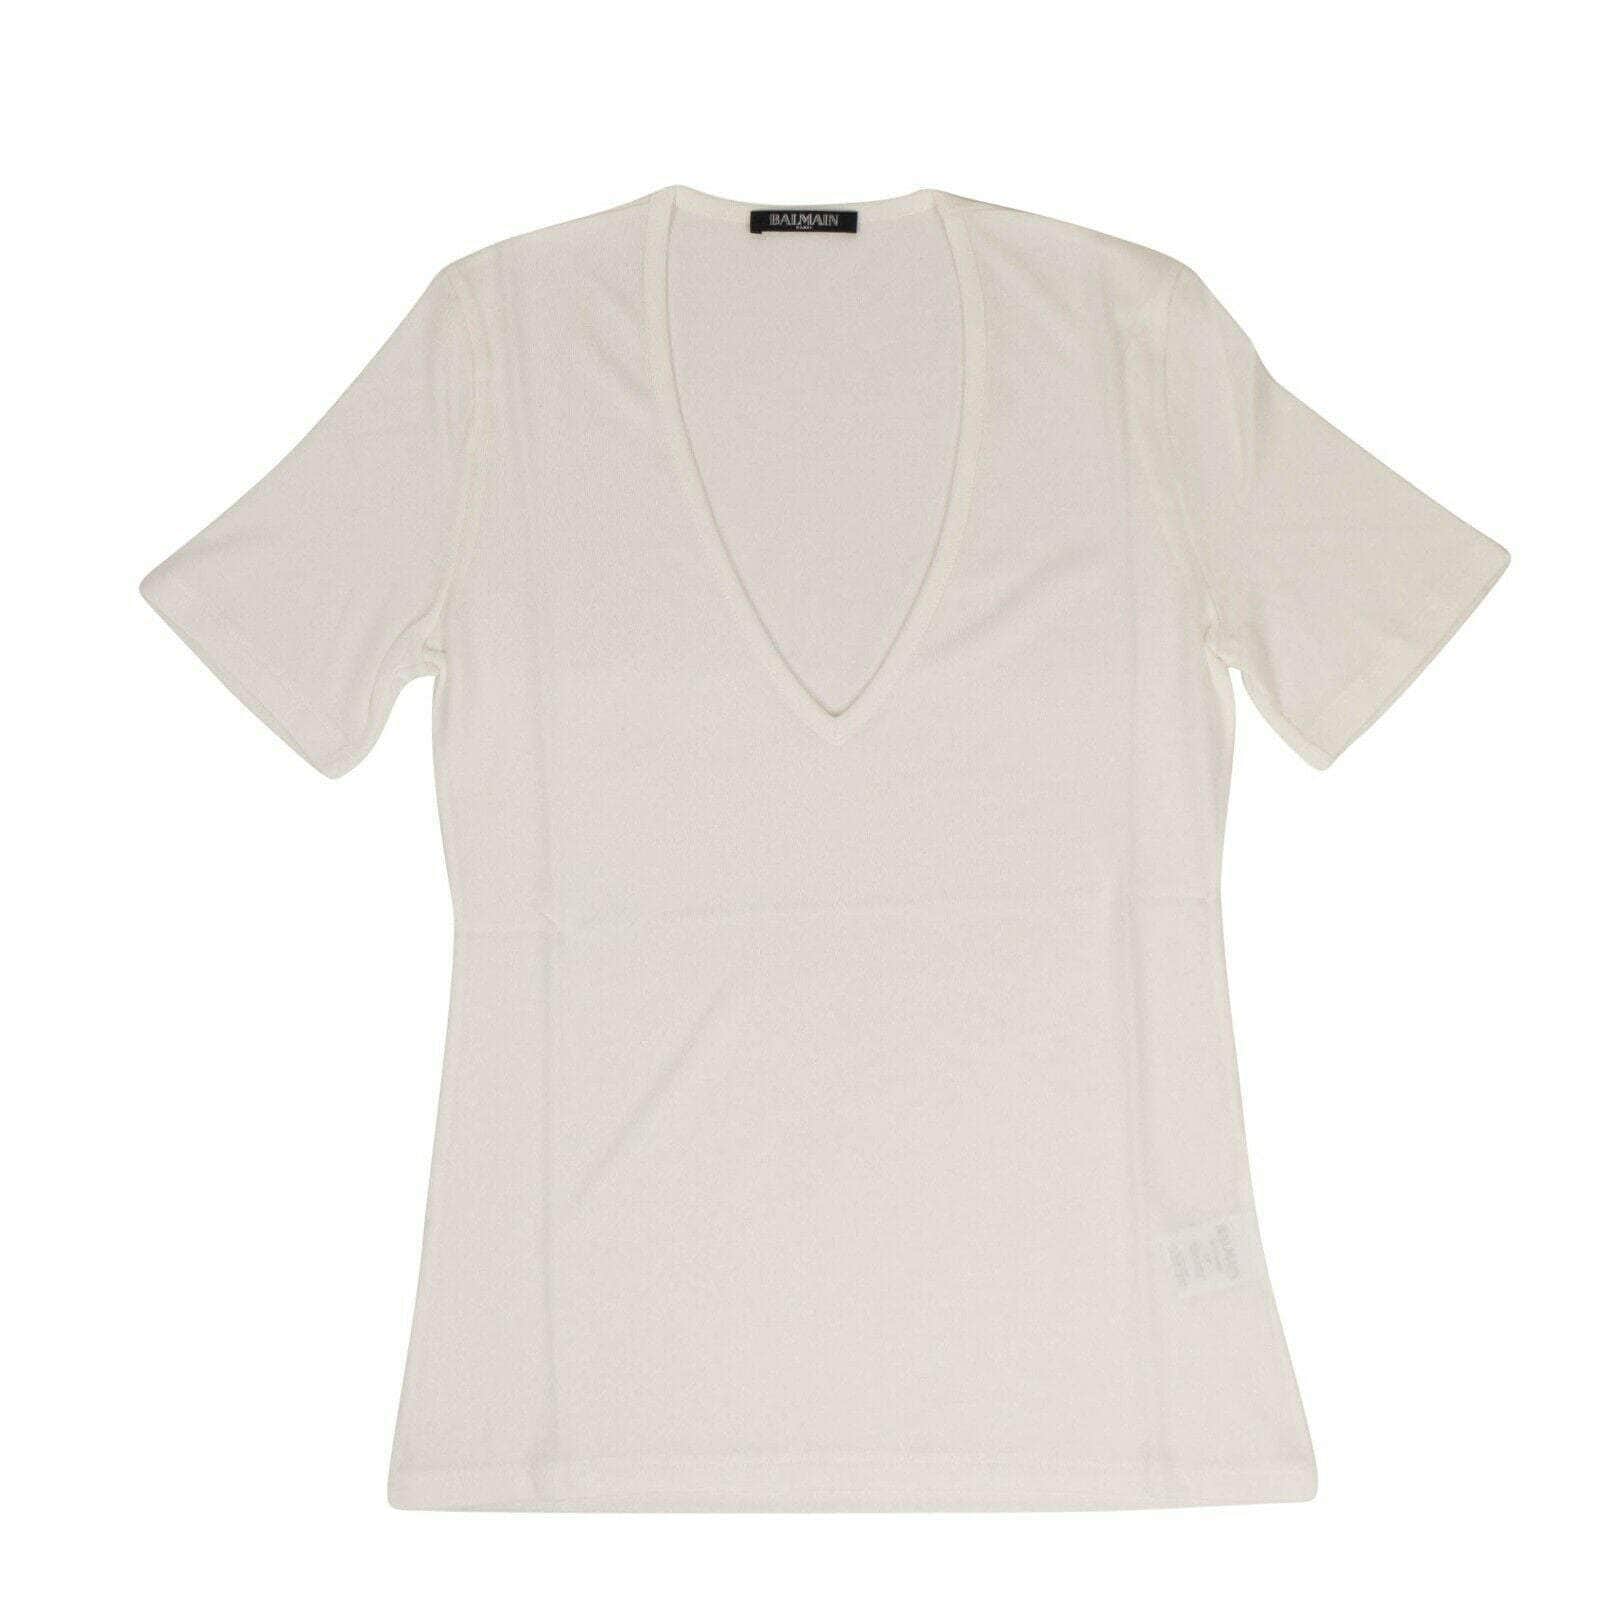 Balmain balmain-paris, BalnBurb, chicmi, couponcollection, gender-womens, july4th, main-clothing, newarrival2, sale-enable, size-0-us-36-eu, size-00-us-34-eu, size-4-us-40-eu, t-shirts, under-250 Women's Short Sleeve Deep V Neck Knit T-Shirt - White